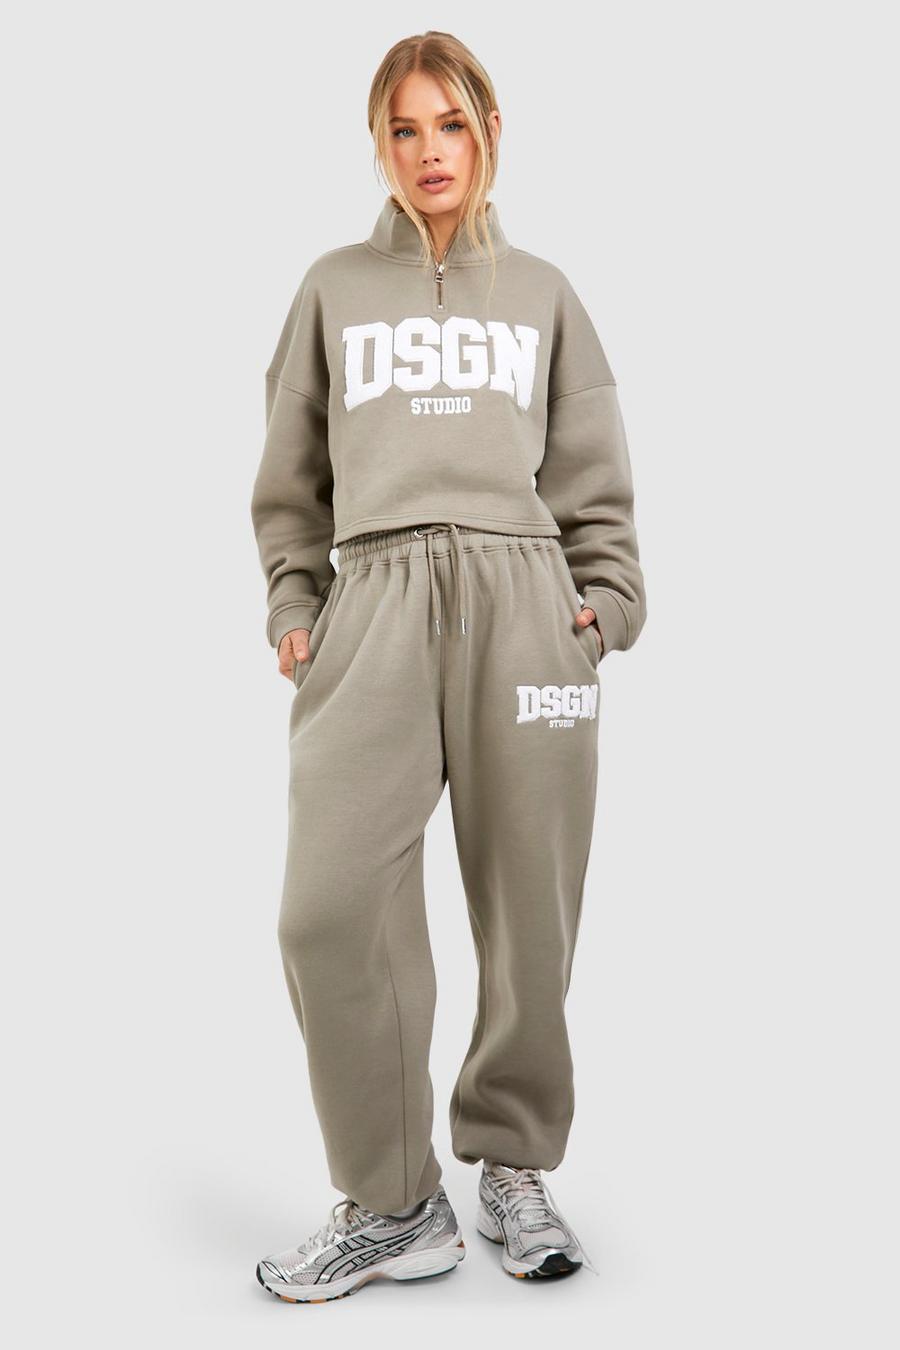 Sweatshirt-Trainingsanzug mit Dsgn Studio Frottee-Applikation, Washed khaki